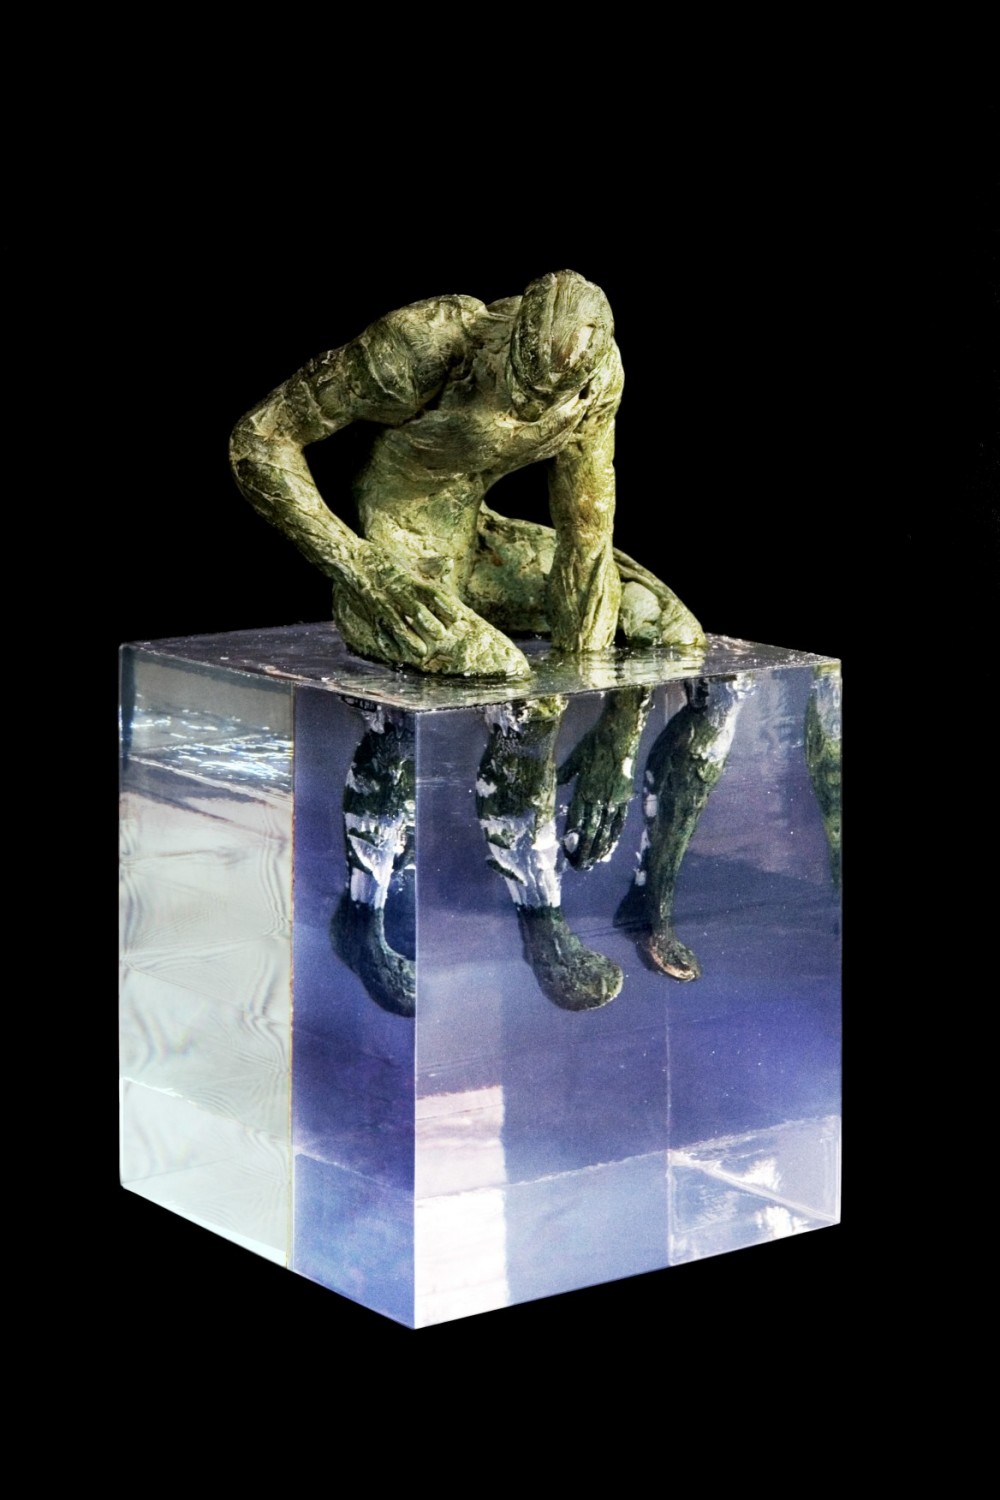 Fernando Suarez, Sentado en cubo, bronze and resin, 15 x 15 x 27cm, edition of 7.